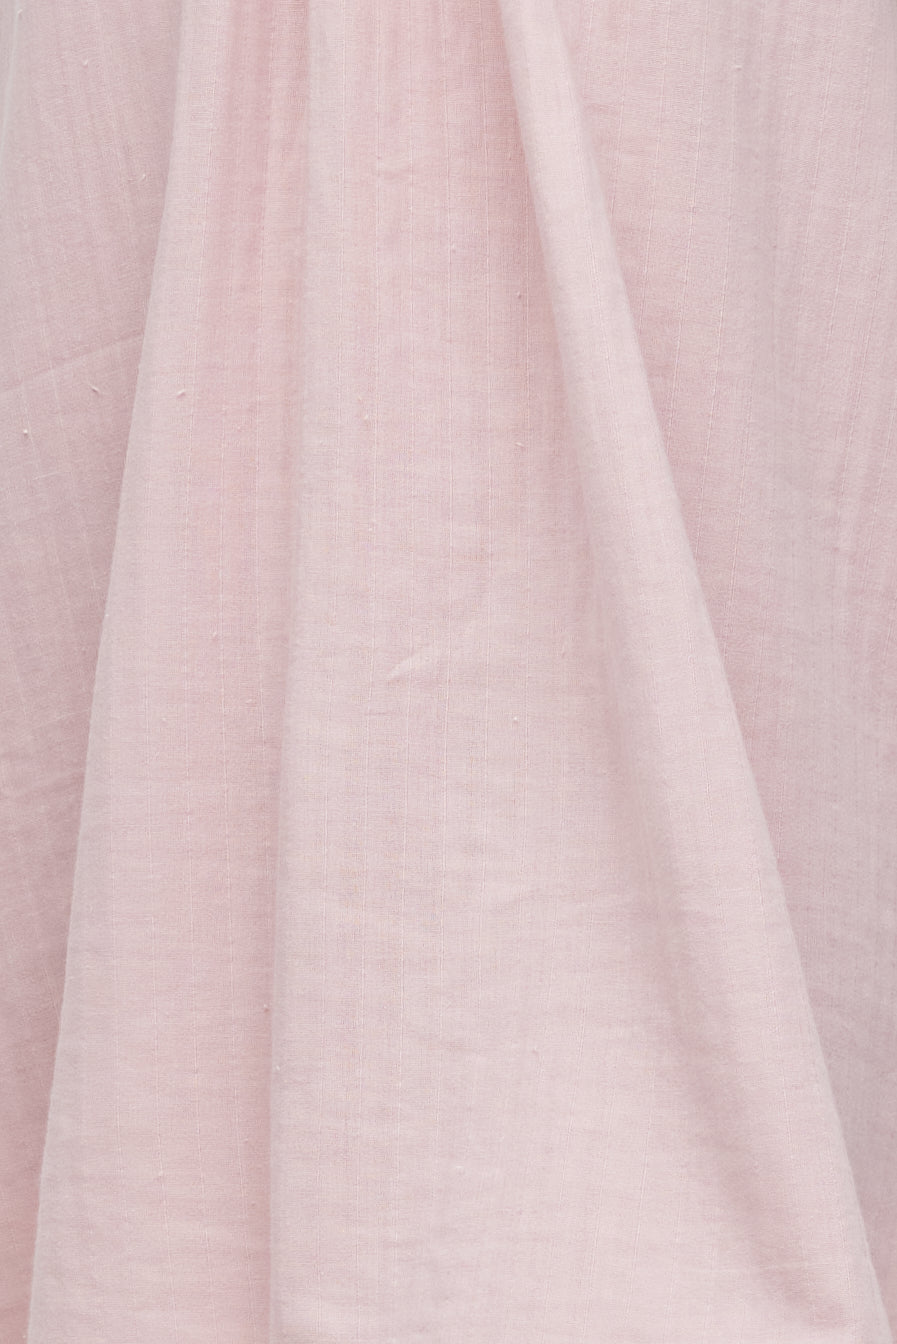 Sleeveless Nightie Pale Pink Striped Gauze